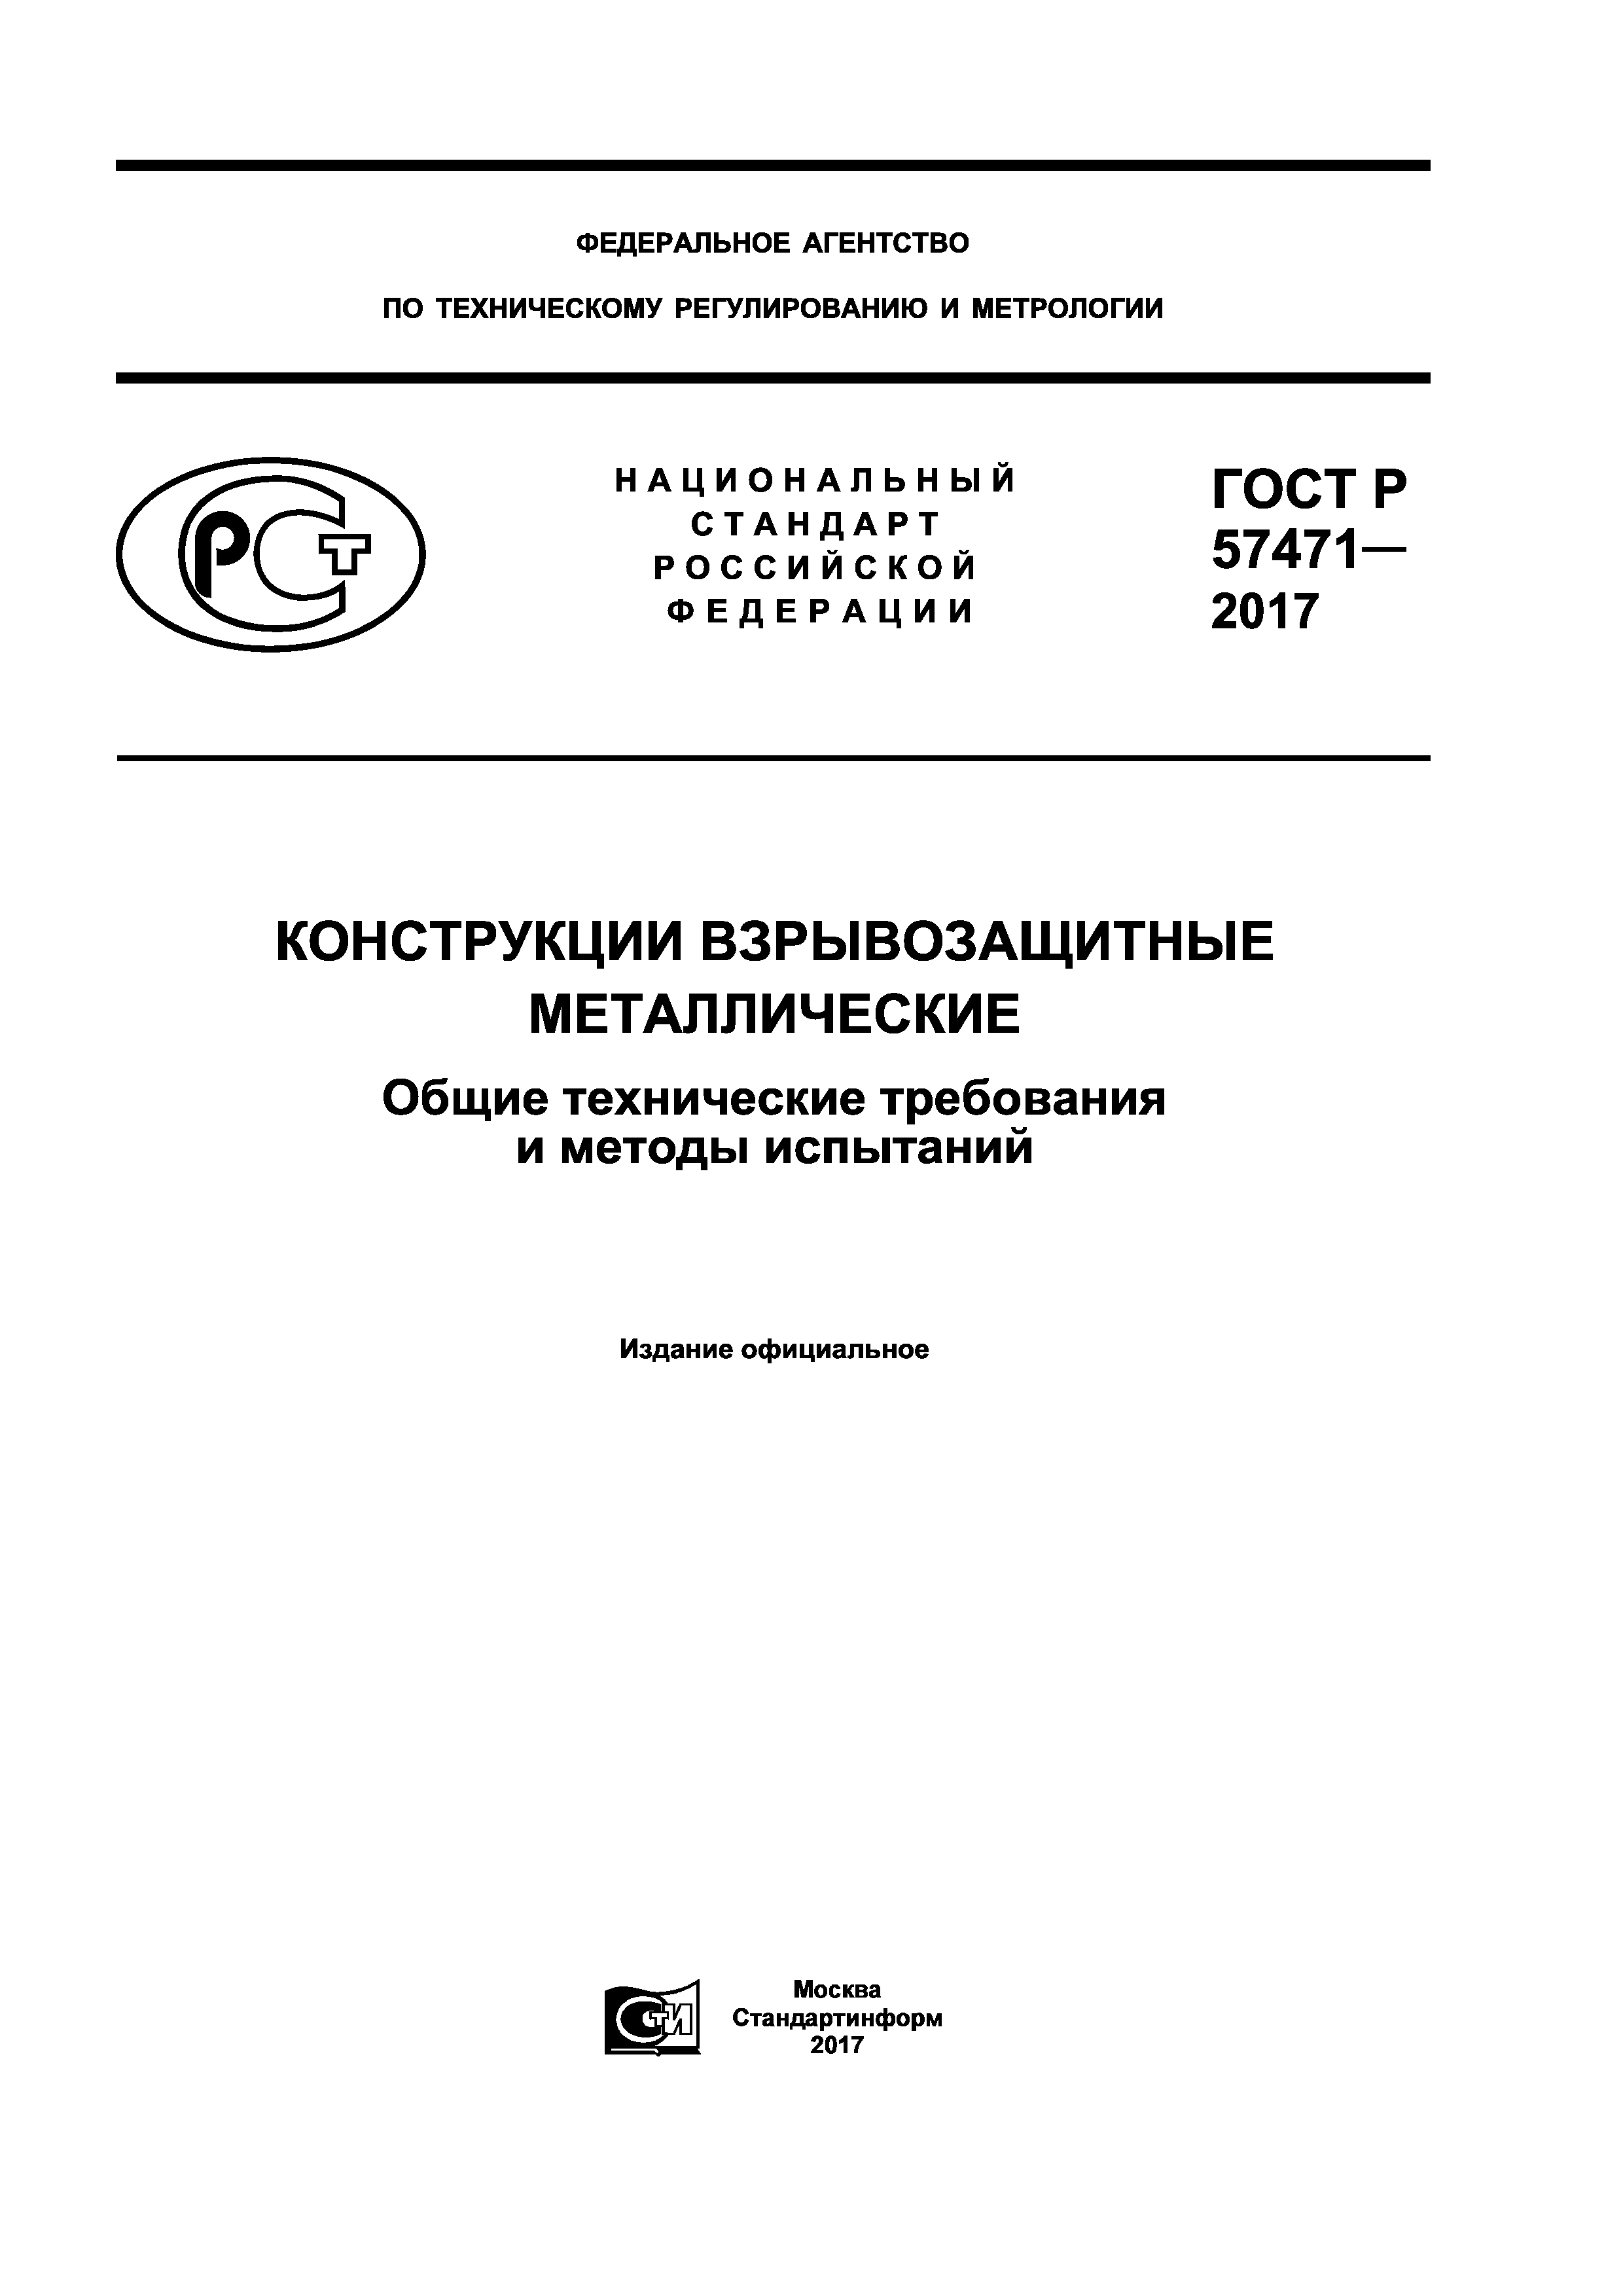 ГОСТ Р 57471-2017